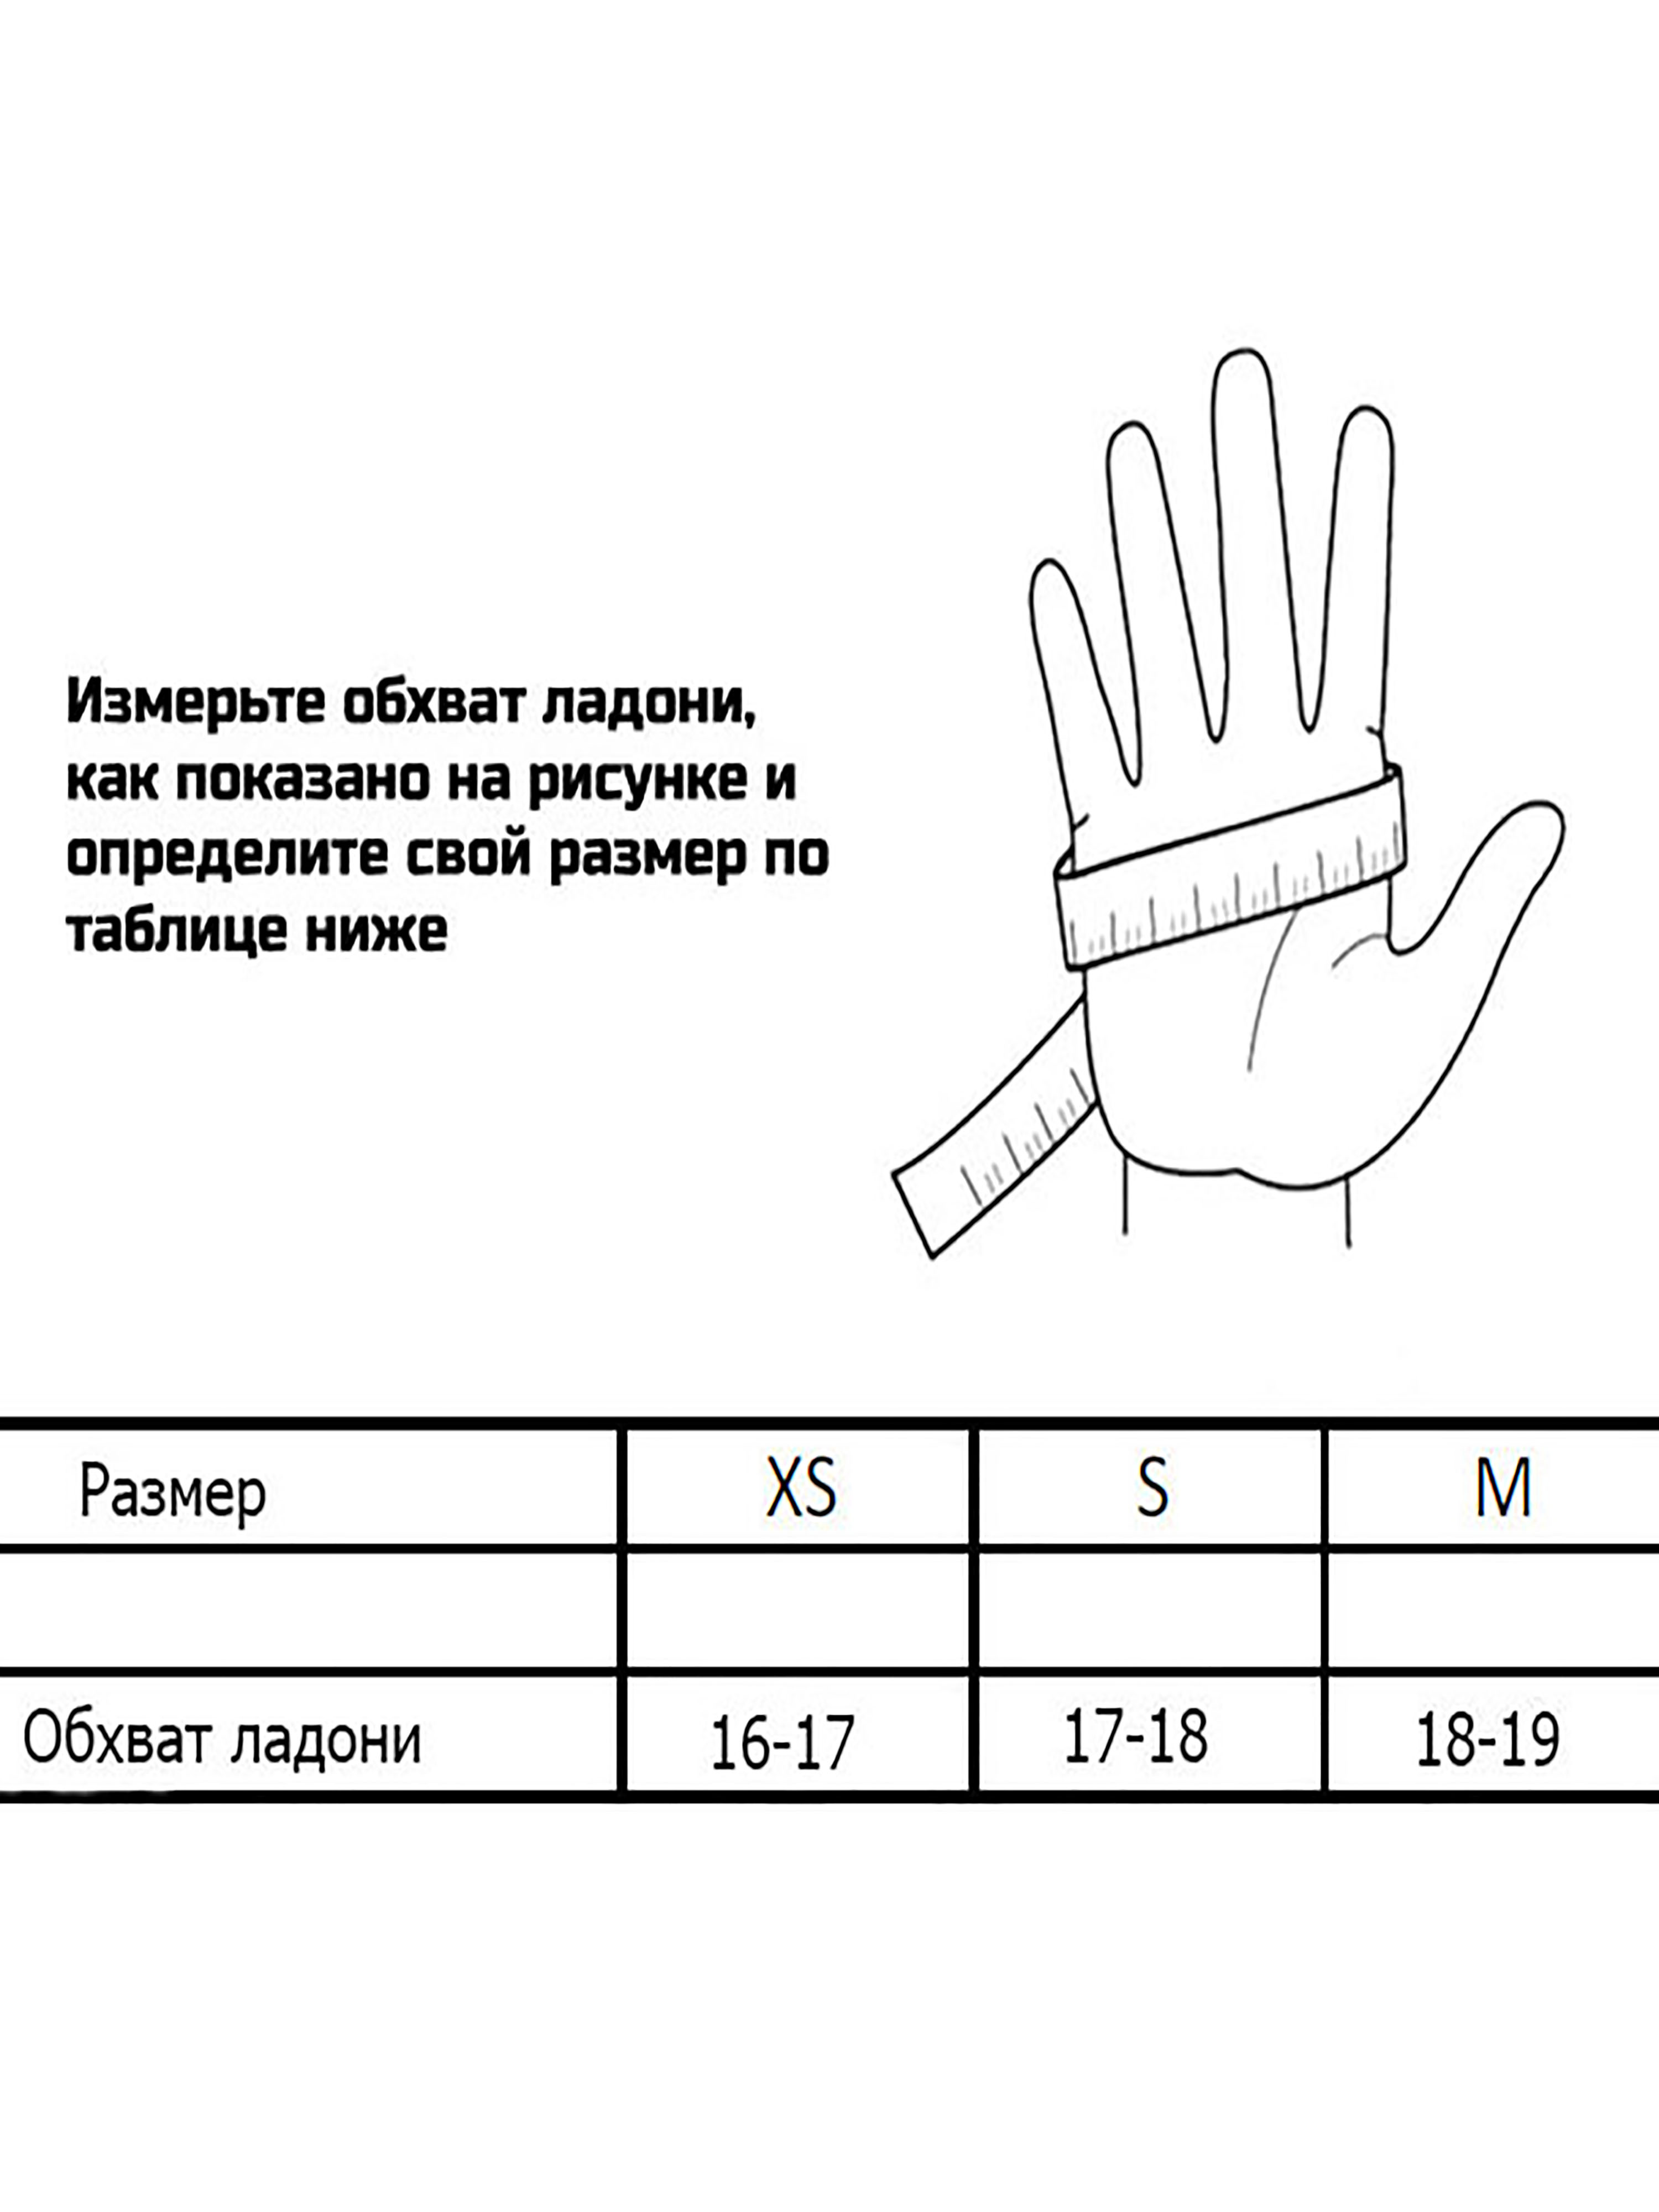 Размеры обхвата руки. Как померить обхват ладони для перчаток. Termit горнолыжные перчатки размер 4 обхват ладони. Размер перчаток обхват ладони. Как измерять обхват Ладо.